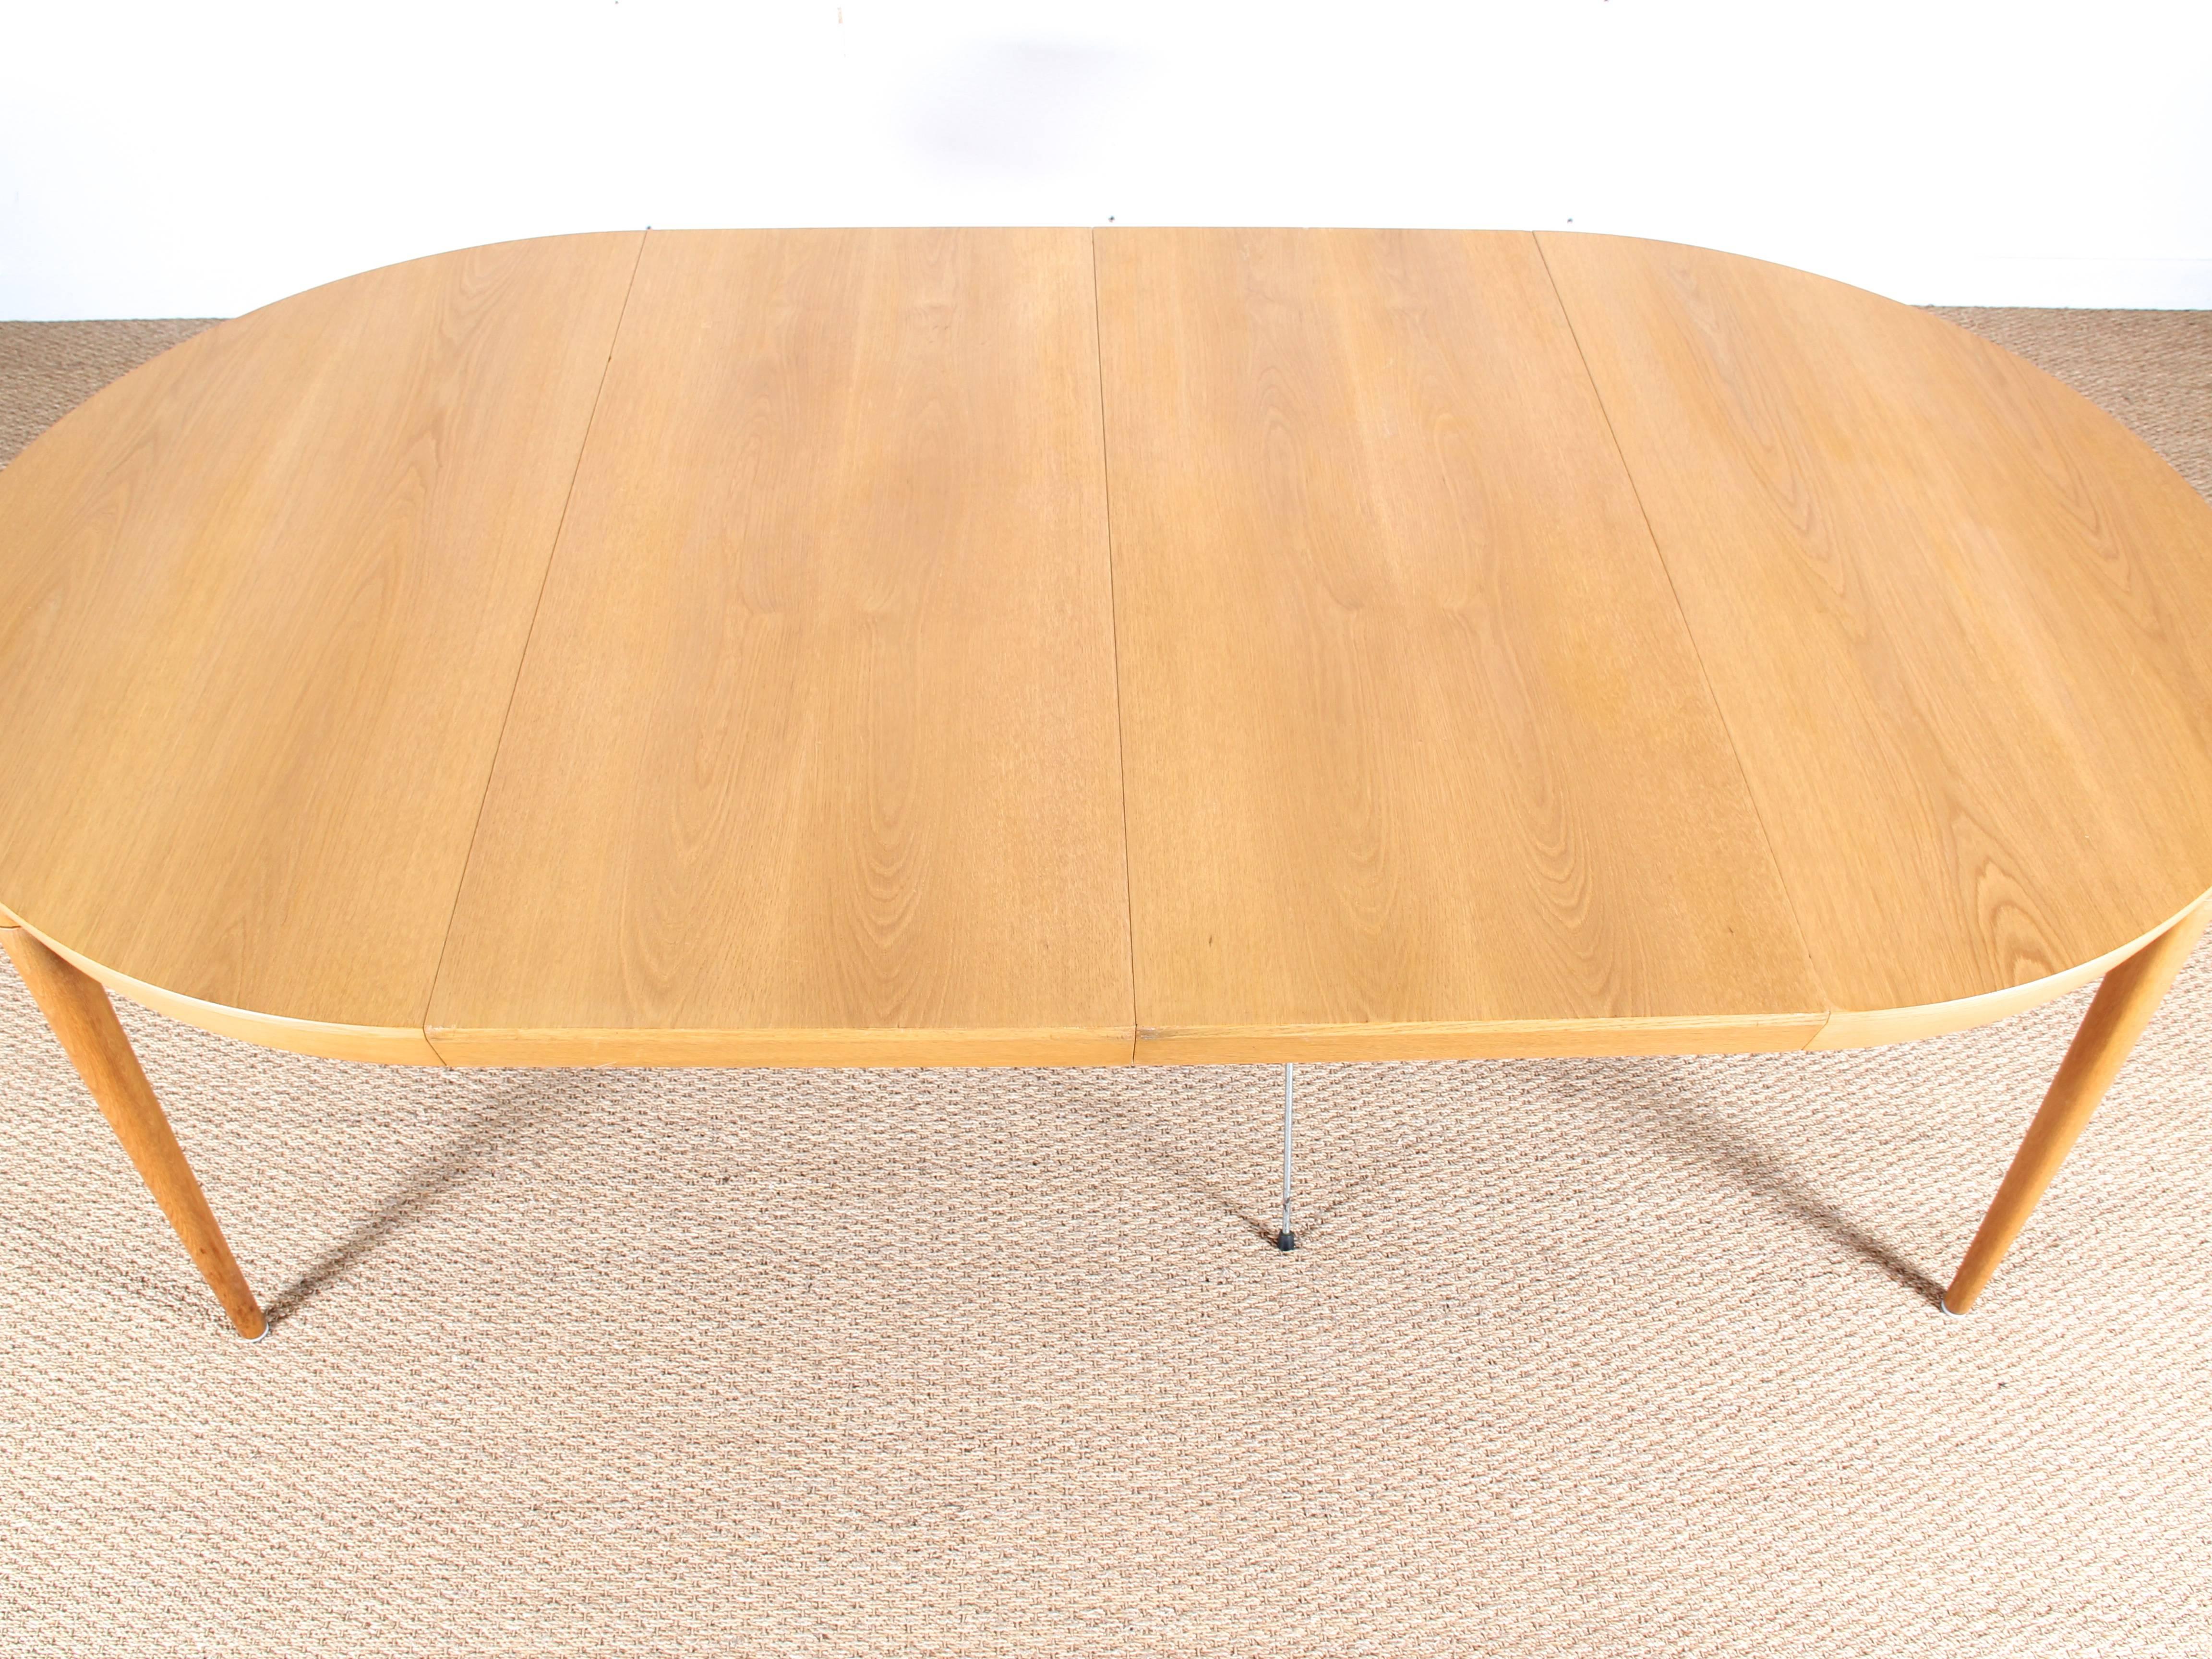 Late 20th Century Mid-Century Modern Round Dining Table in Oak by Erik Riisager-Hansen